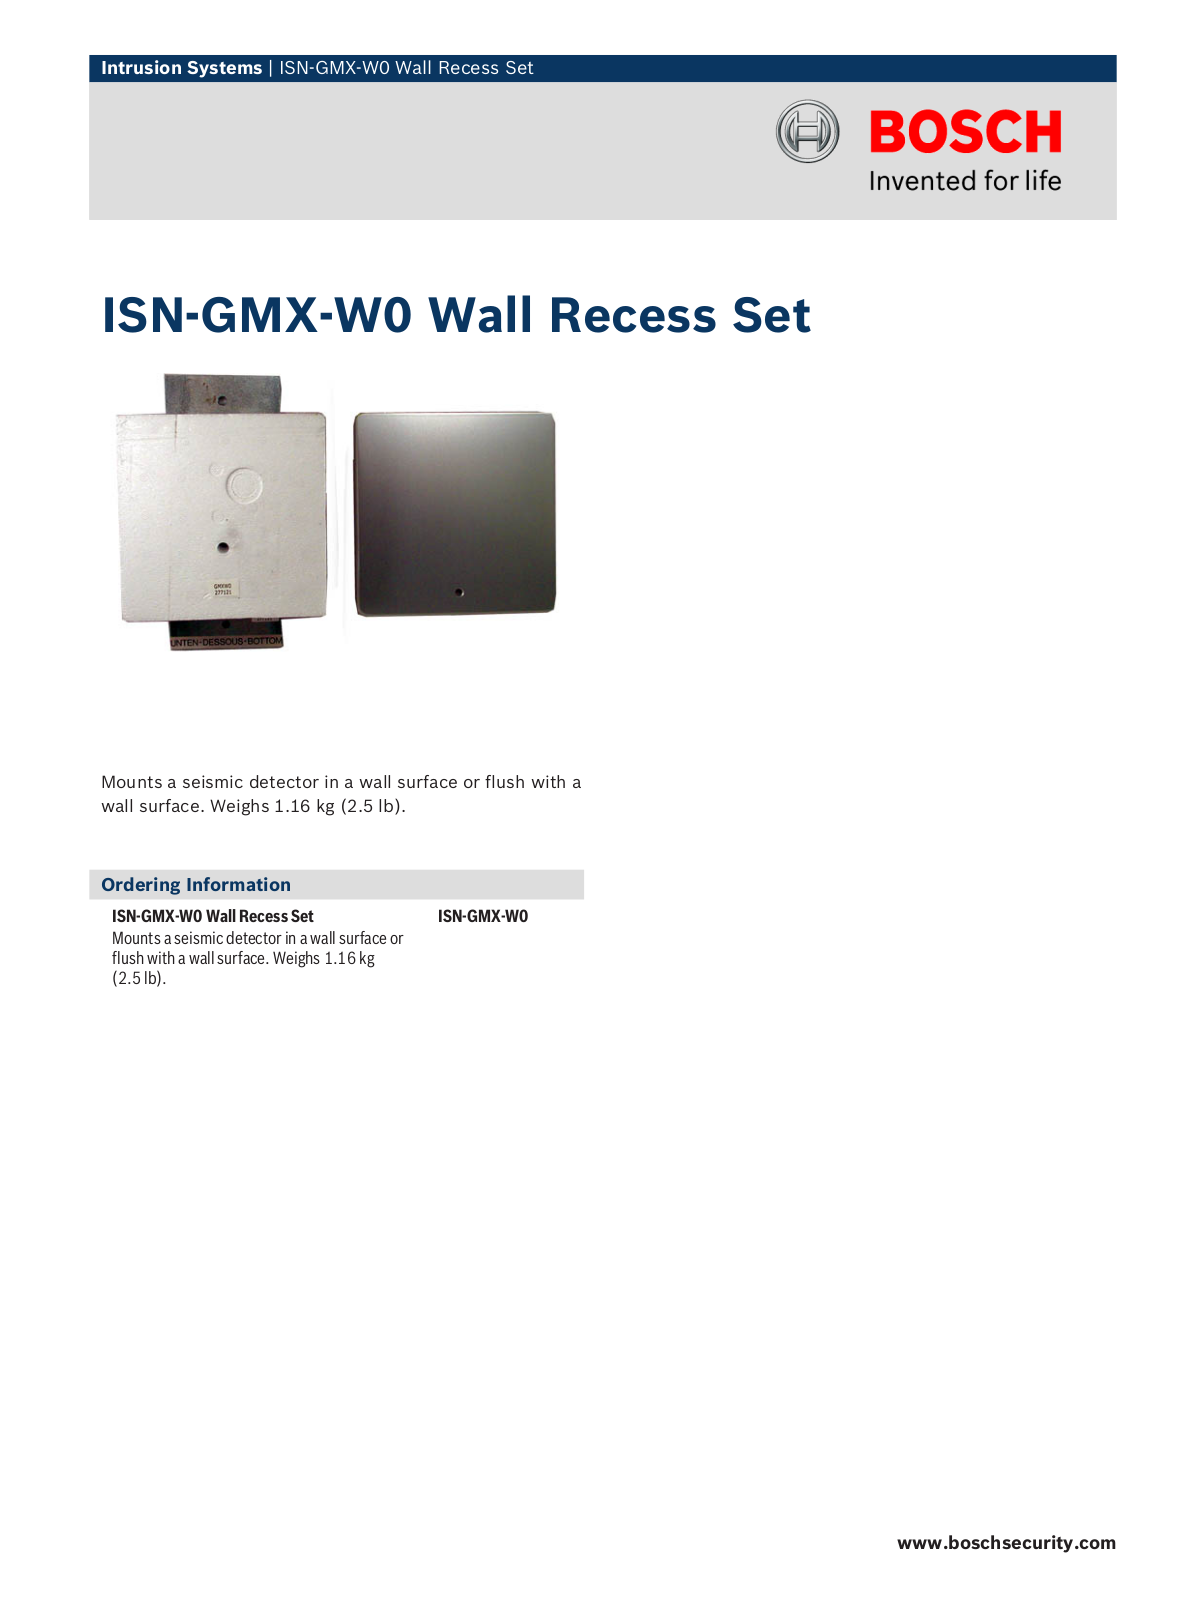 Bosch ISN-GMX-W0 Specsheet